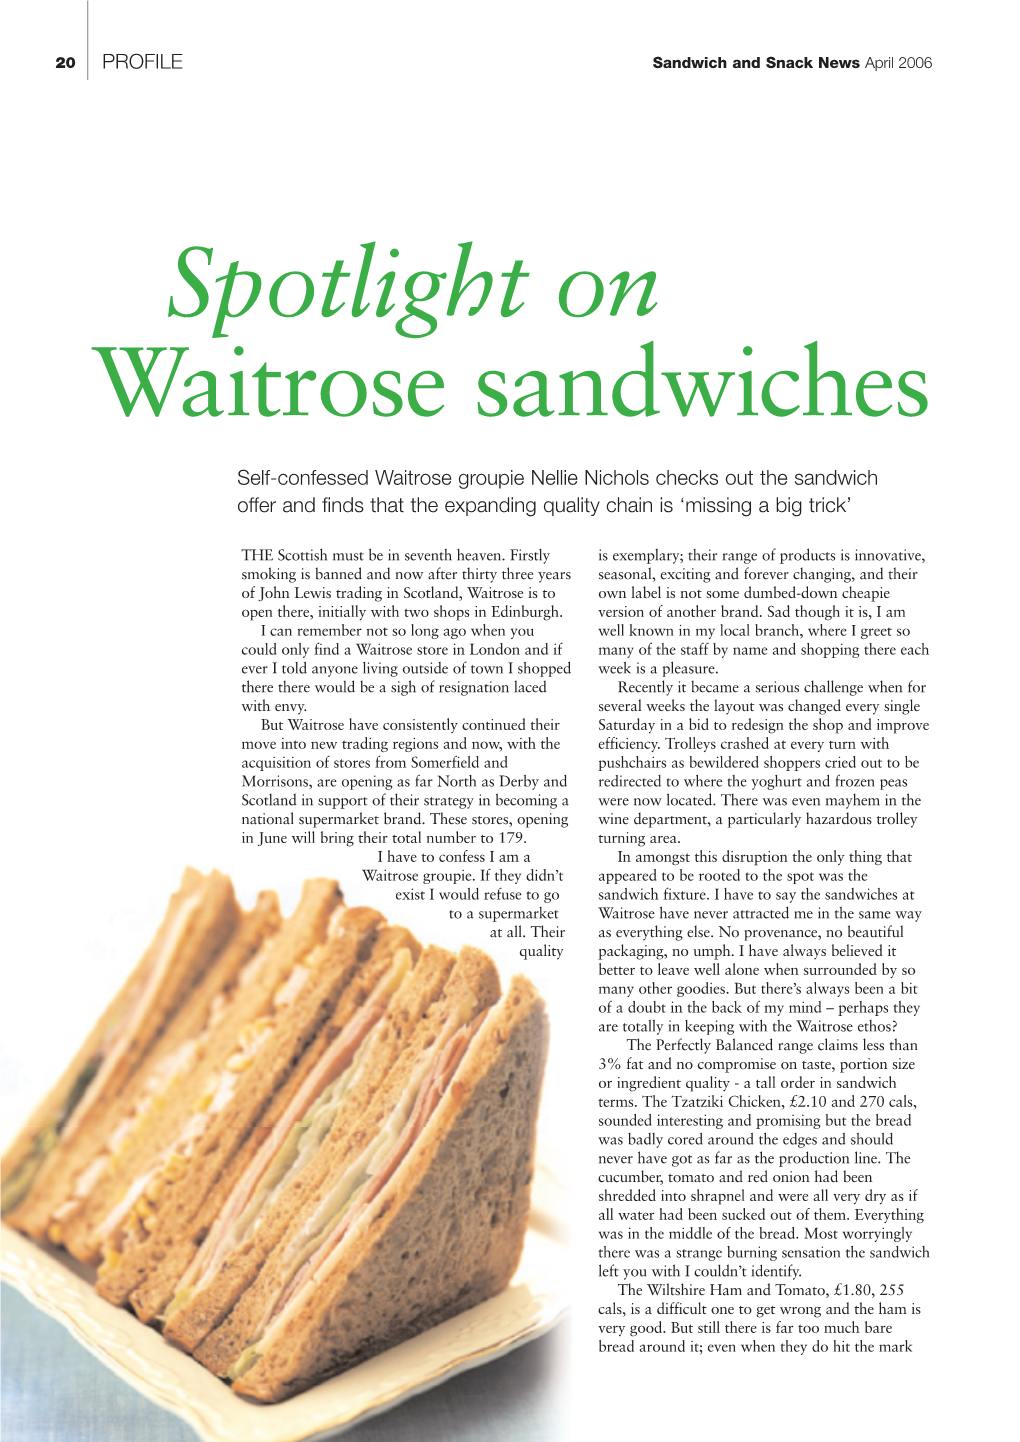 Spotlight on Waitrose Sandwiches